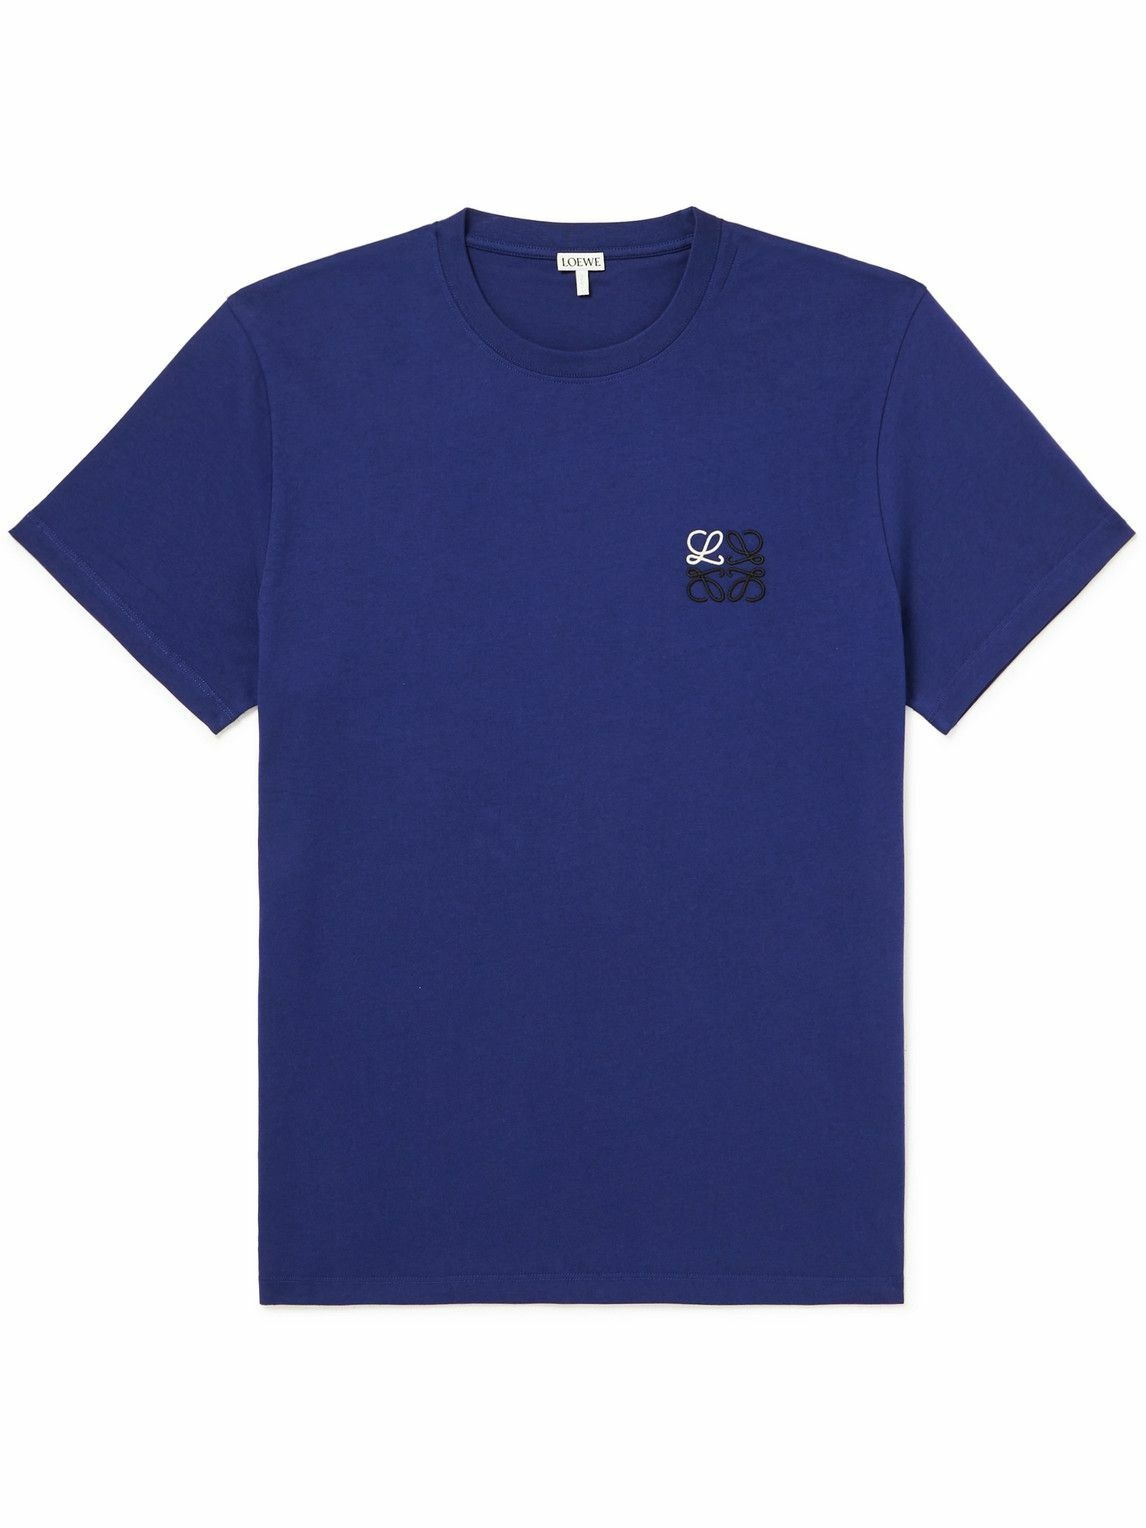 Loewe - Logo-Embroidered Cotton-Jersey T-Shirt - Blue Loewe